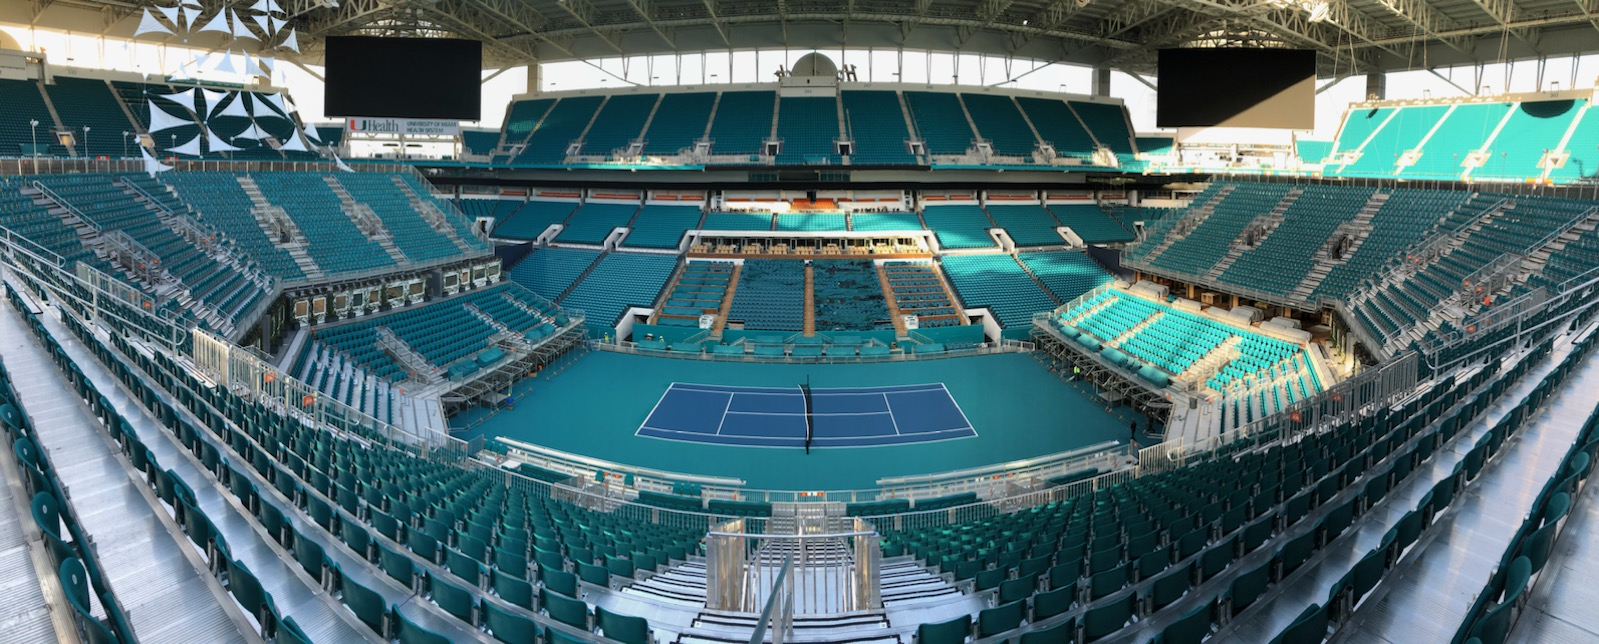 Miami Open Tennis Stadium Seating Chart